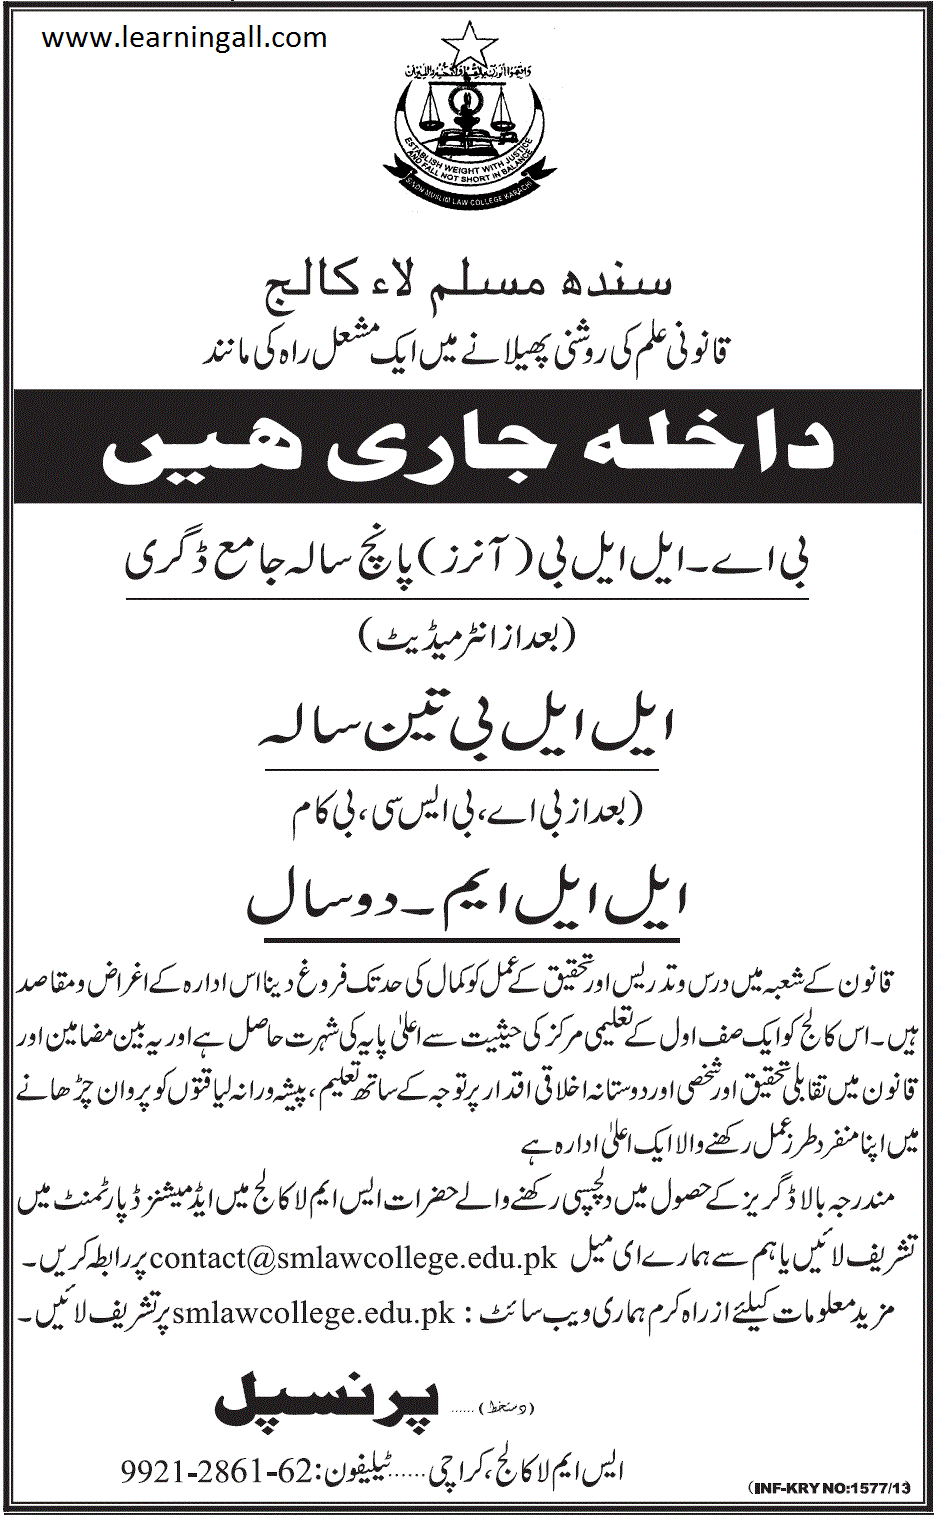 Sindh Muslim Law College Karachi July 2020